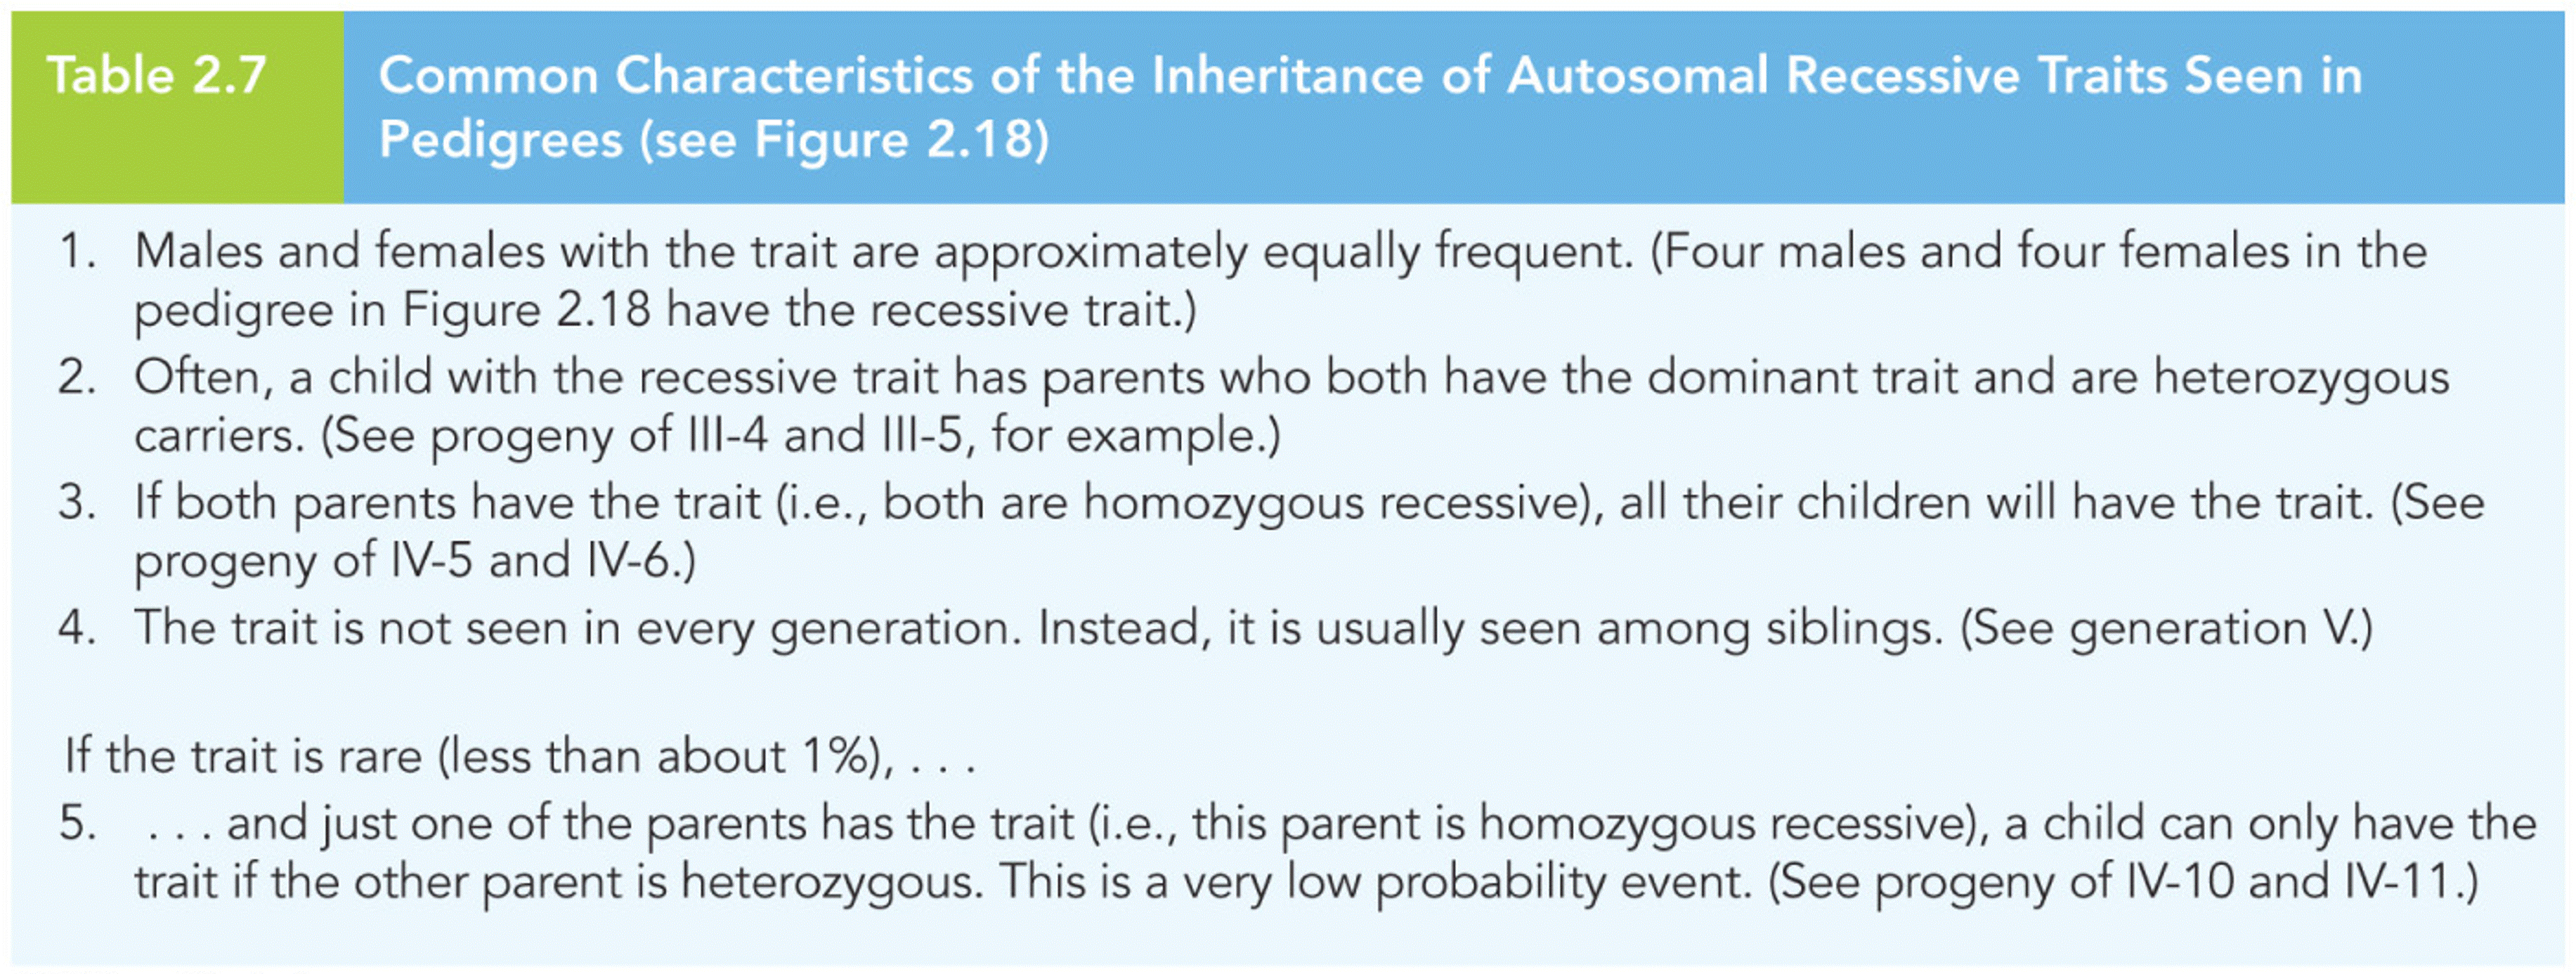 Common Characteristics of the Inheritance of Autosomal Recessive Traits Seen in Pedigrees 